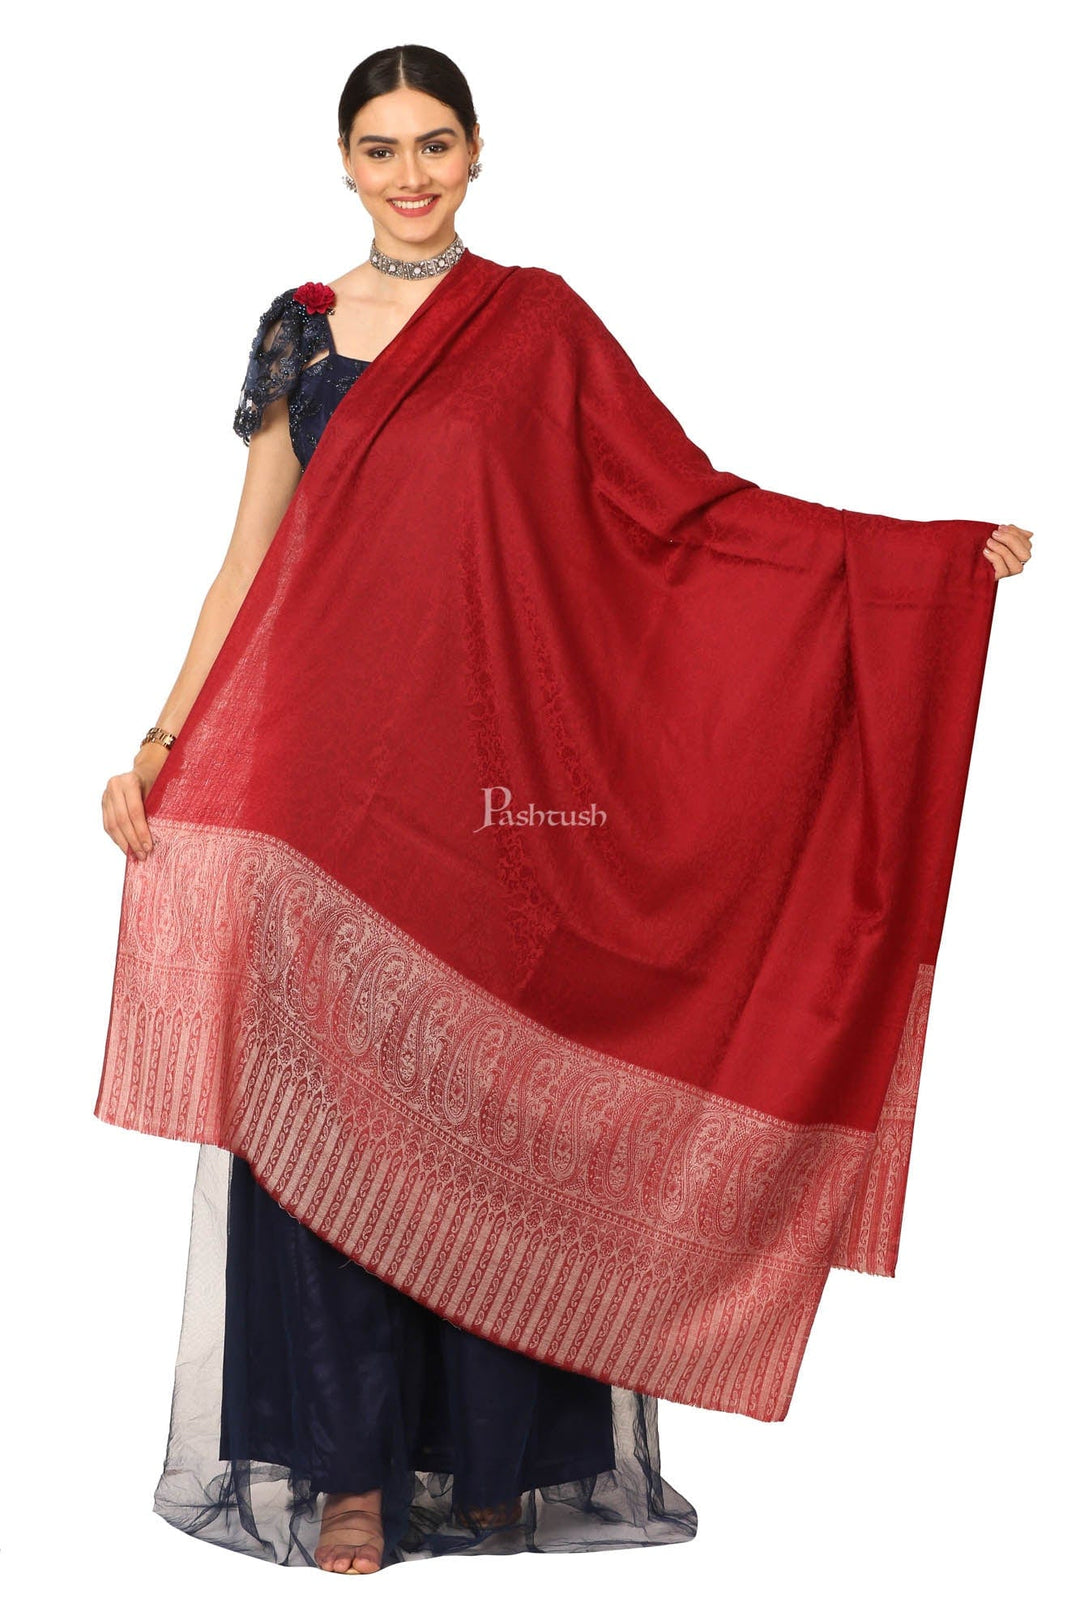 Pashtush India Womens Shawls Pashtush Women'S Wool Ultra Soft Fine Wool Cashmere Blended Shawl - Maroon